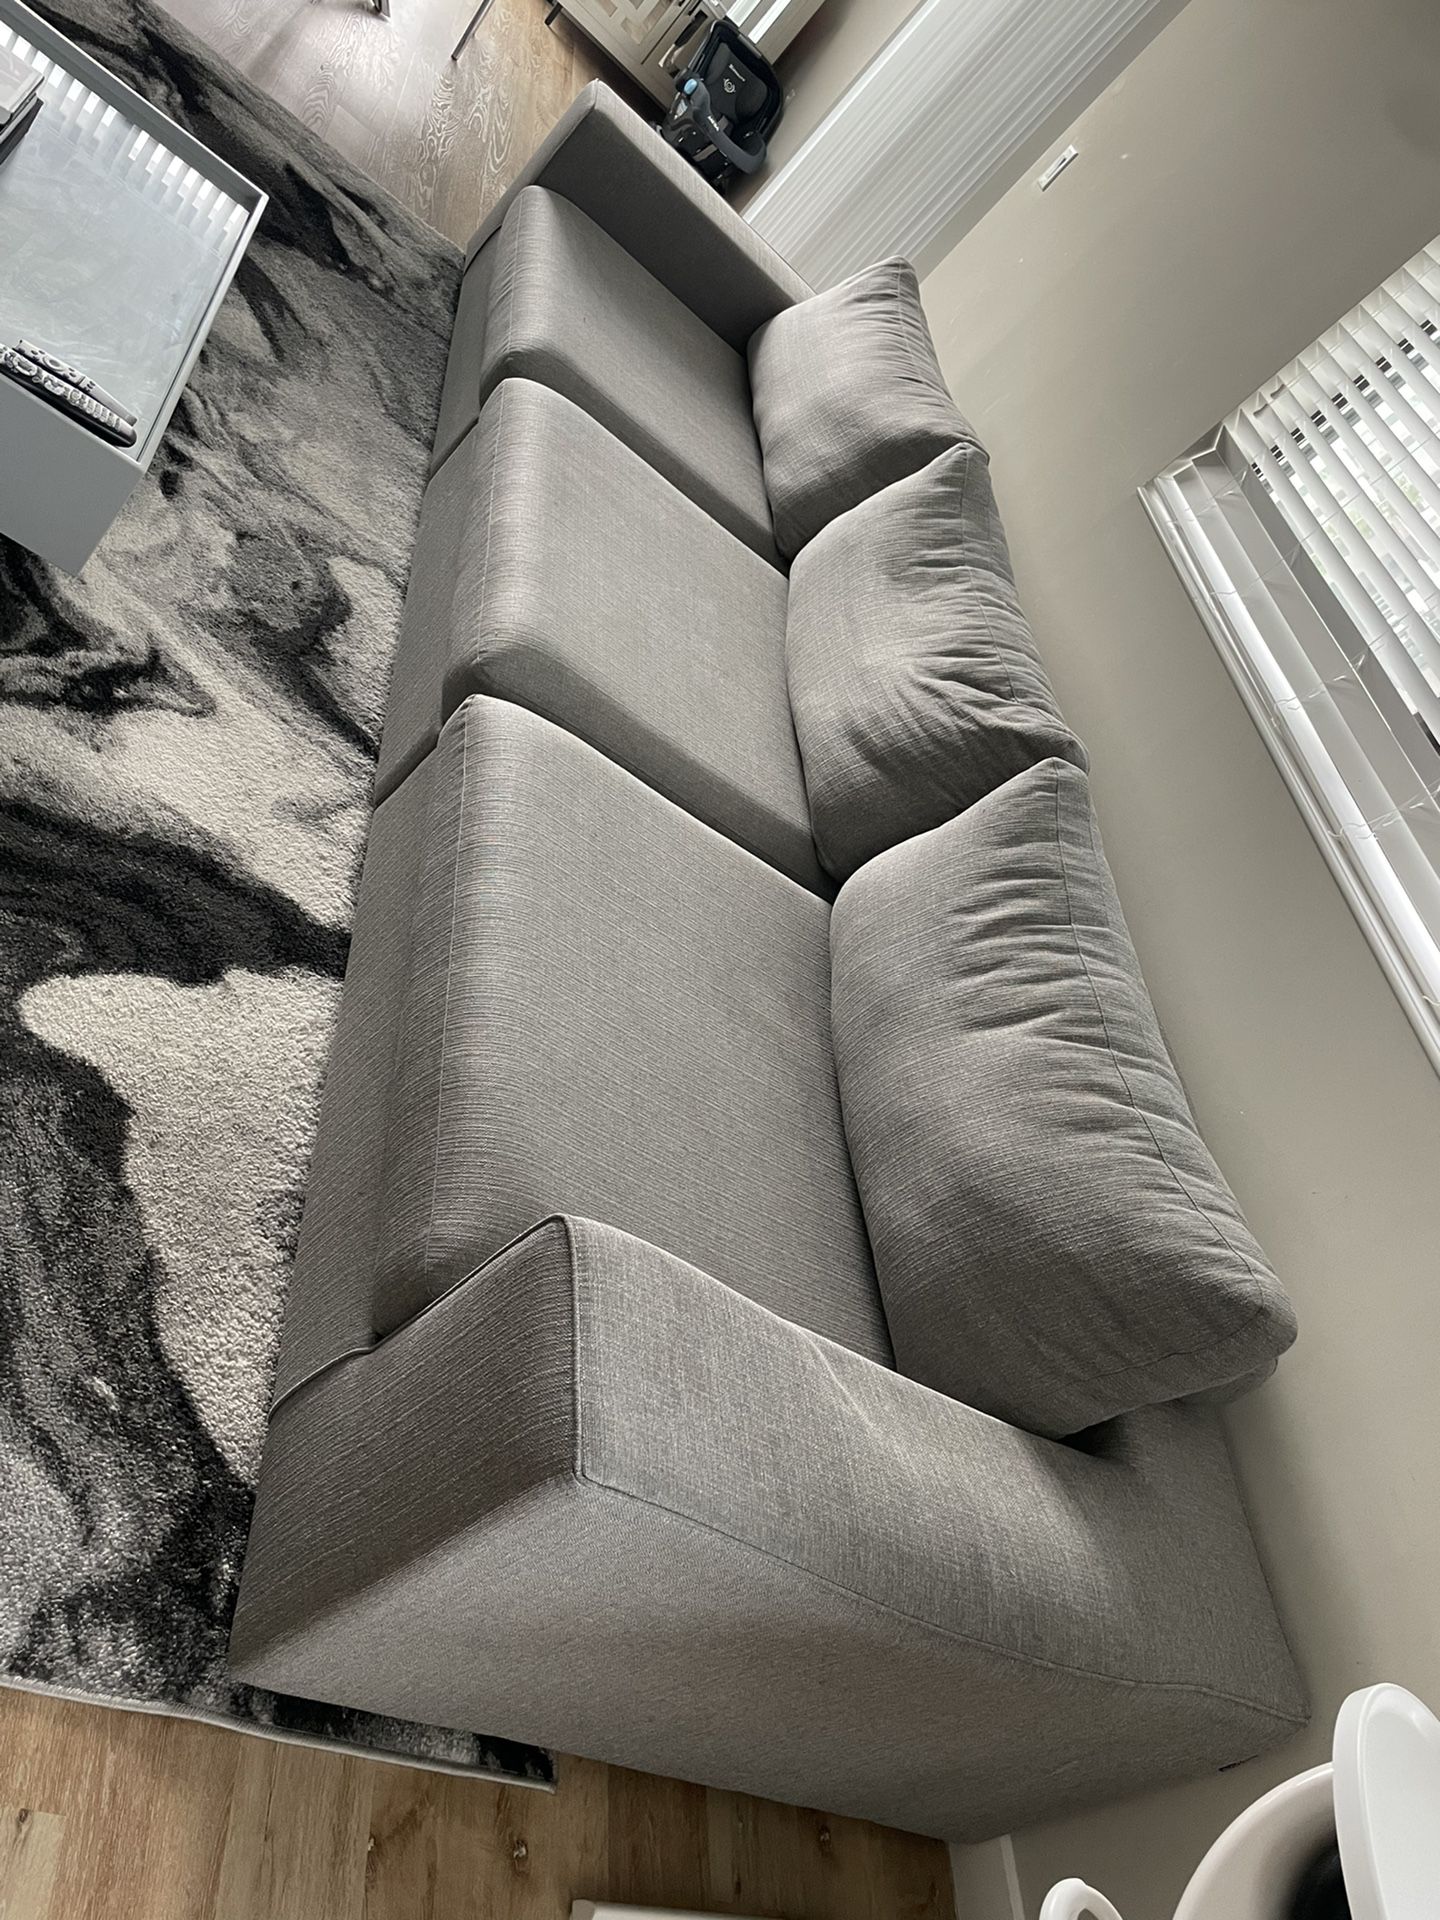 Modani Edison 3pc Couch Light Grey